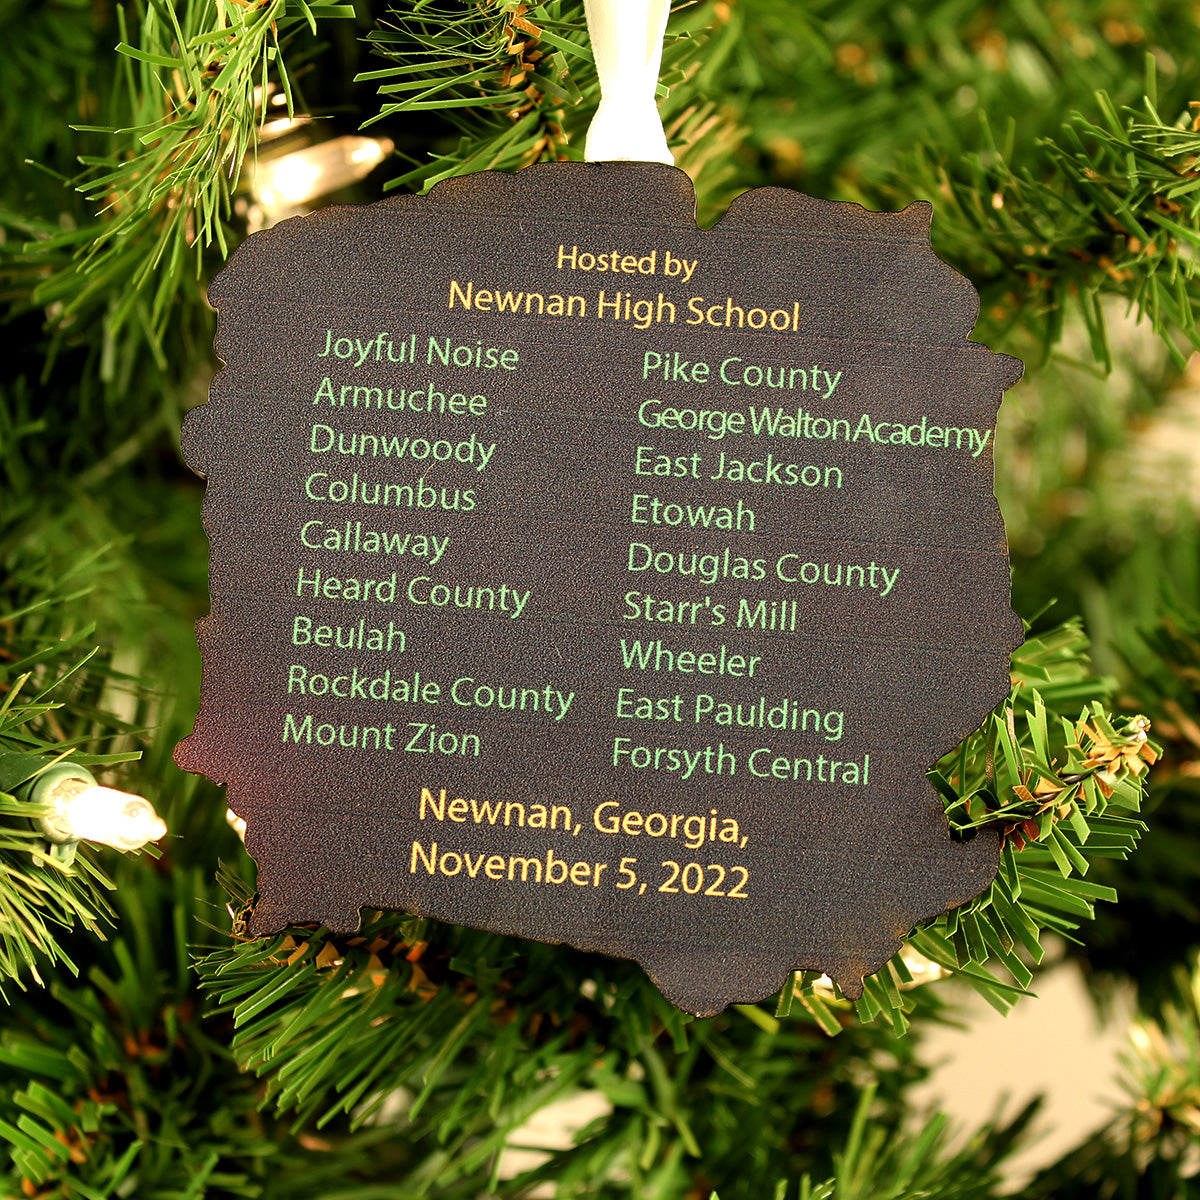 Newnan High School "Old South Invitational" 2022 Ornament